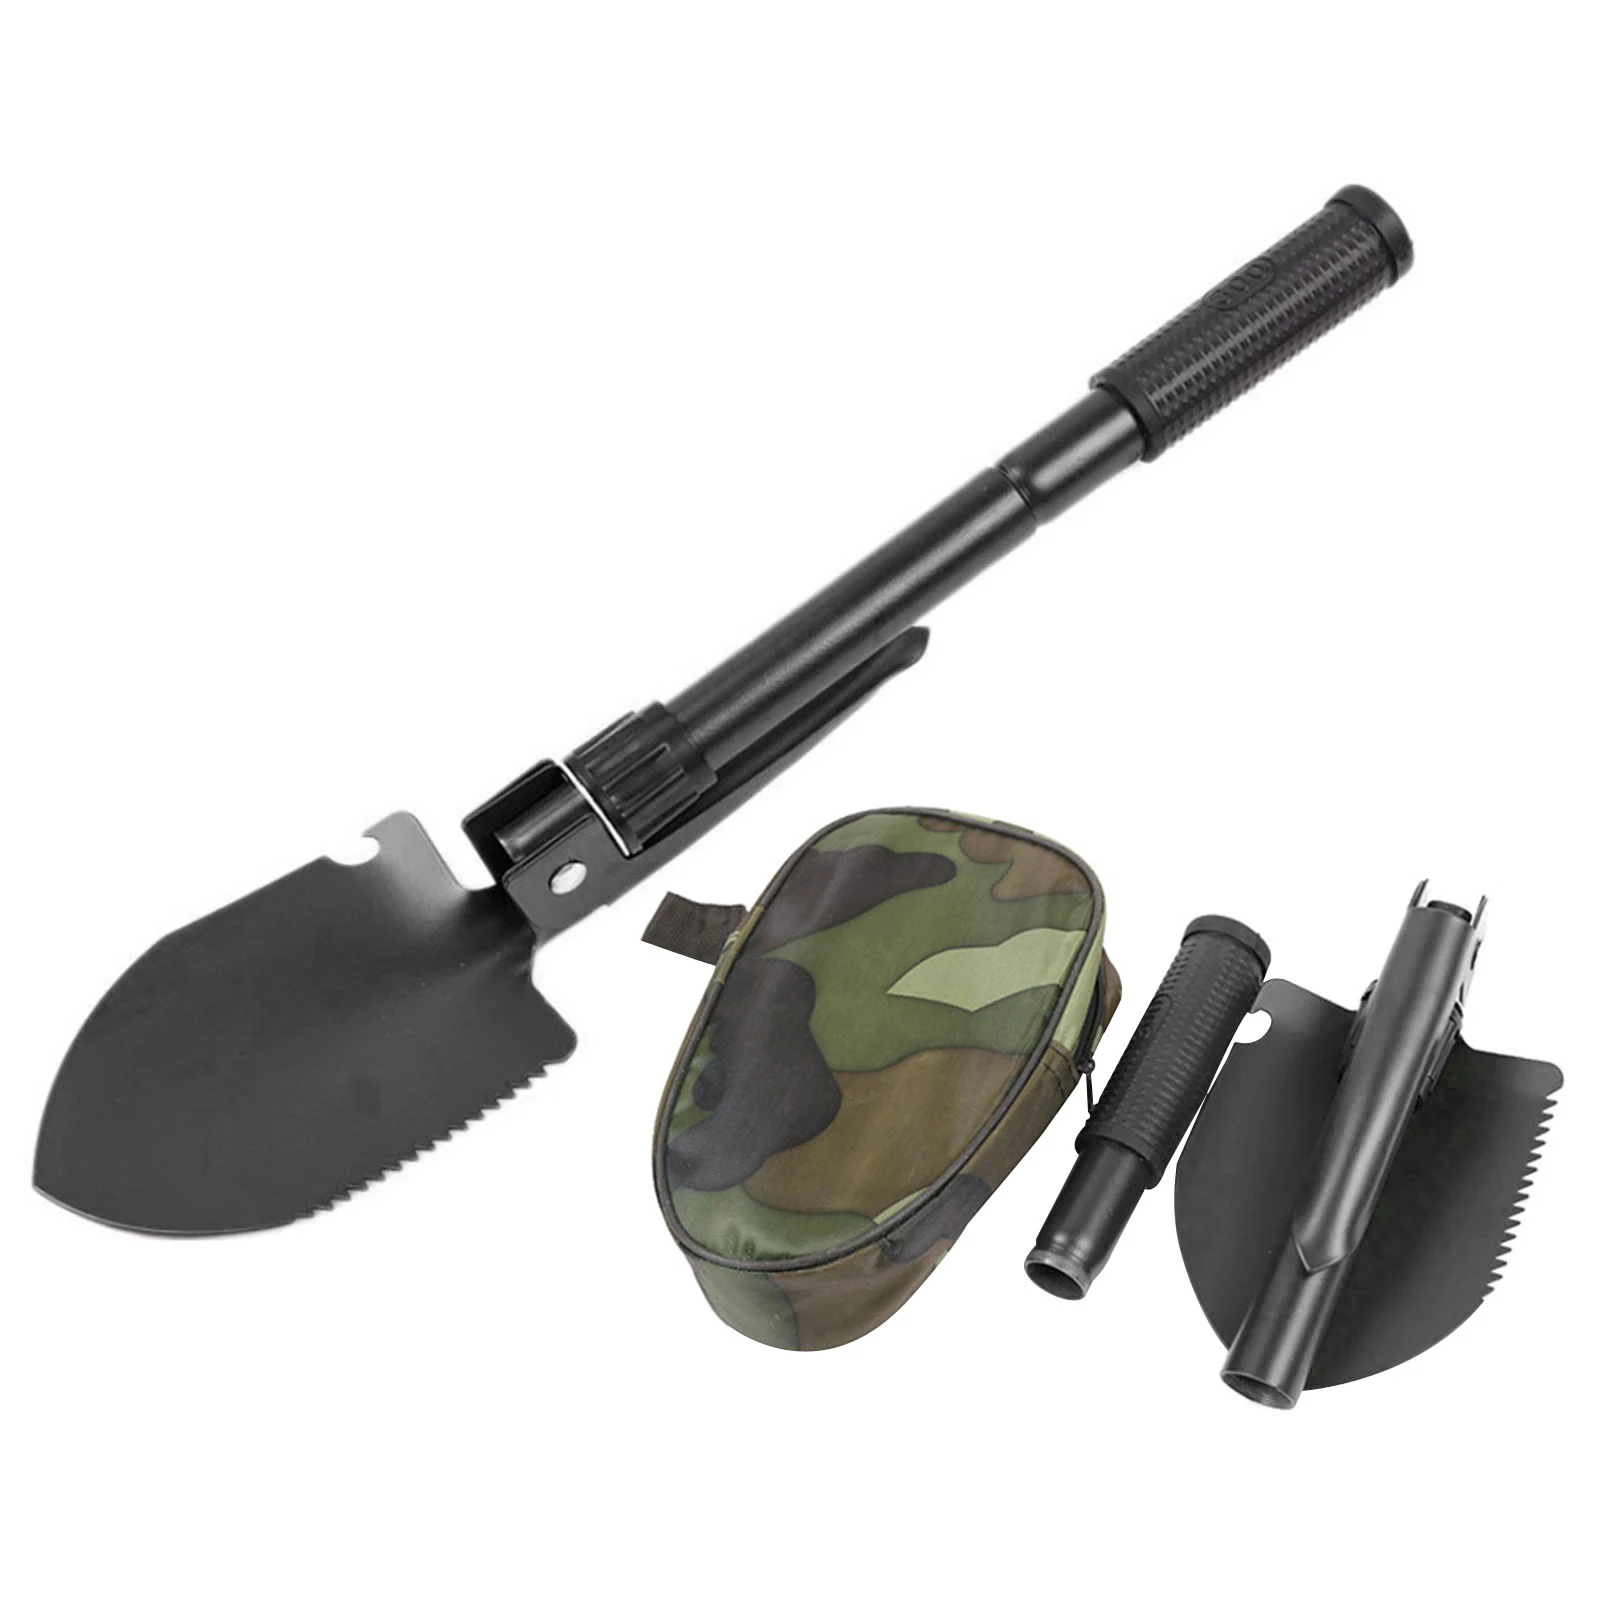 

Folding Shovel Multifunction Survival Spade Field Survival Training Tool Bottle Opener Nail Puller Hoe Emergency Whistle